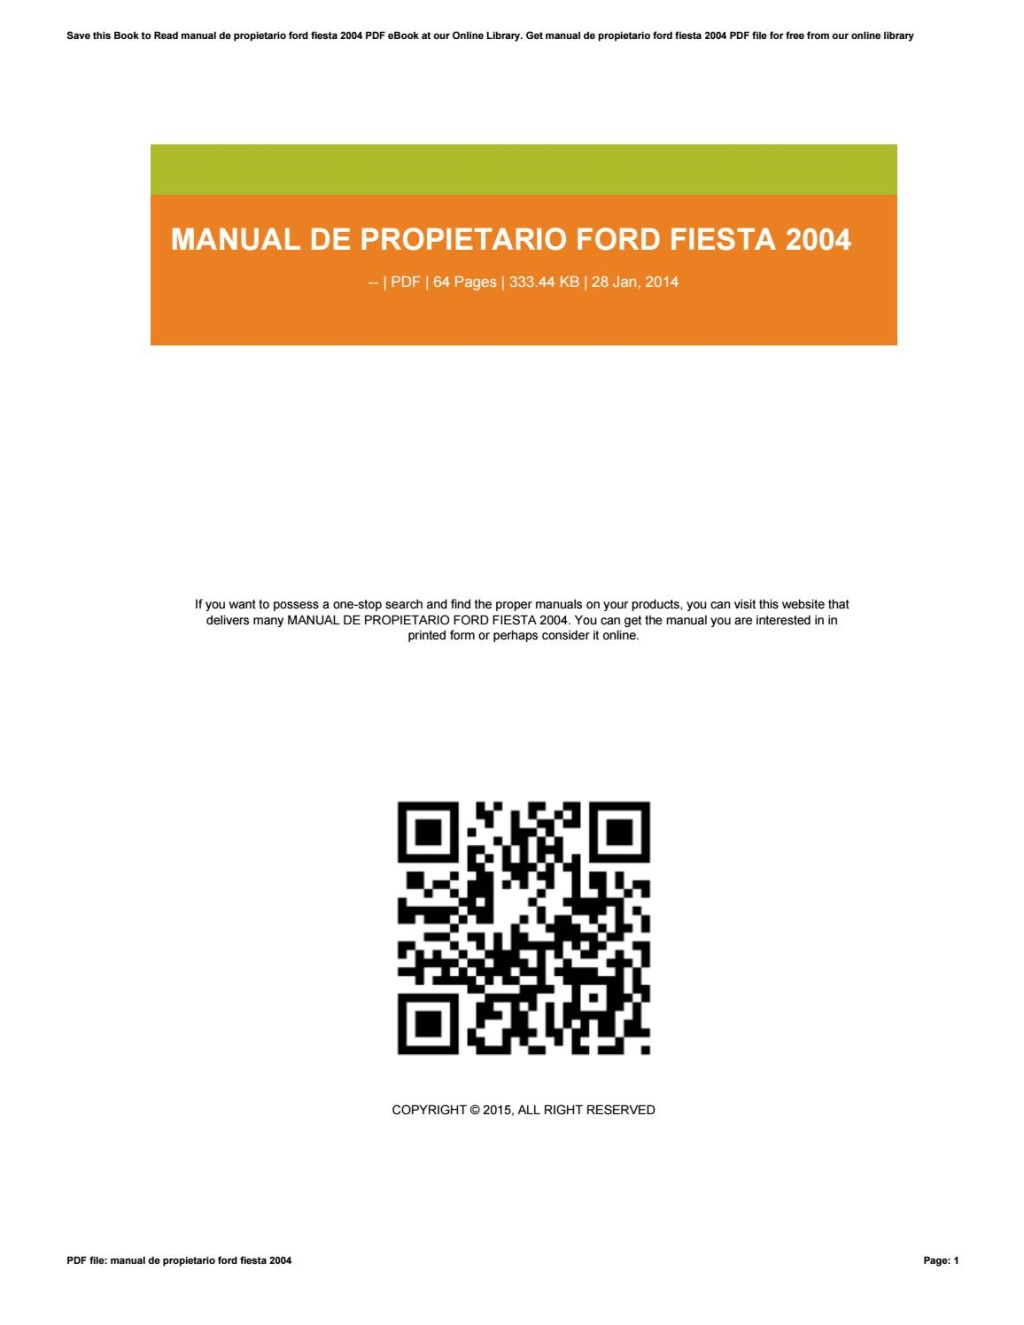 Picture of: Manual de propietario ford fiesta  by tvchd – Issuu